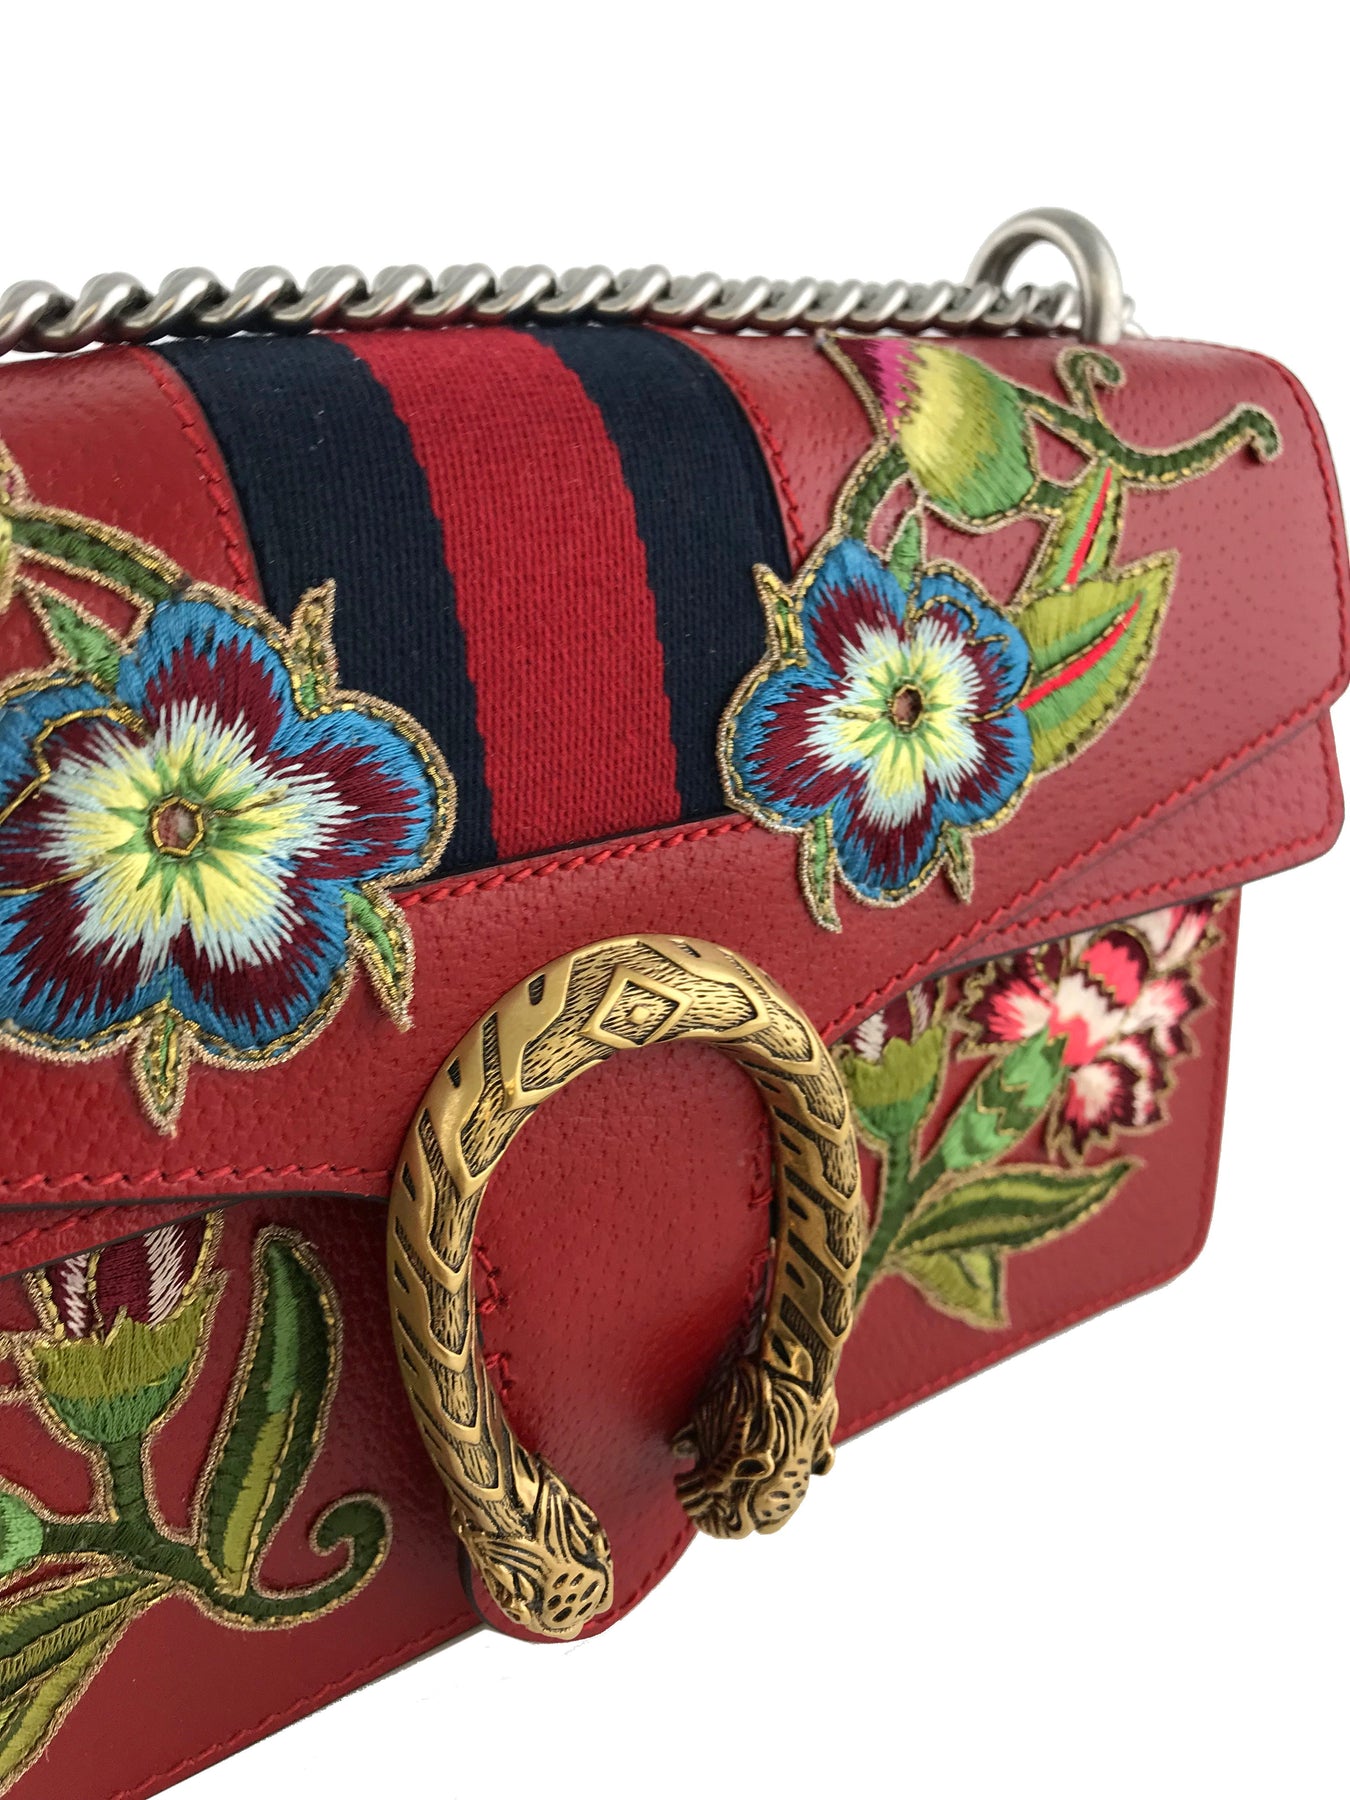 GUCCI Calfskin Web Floral Embroidered Small Dionysus Shoulder Bag